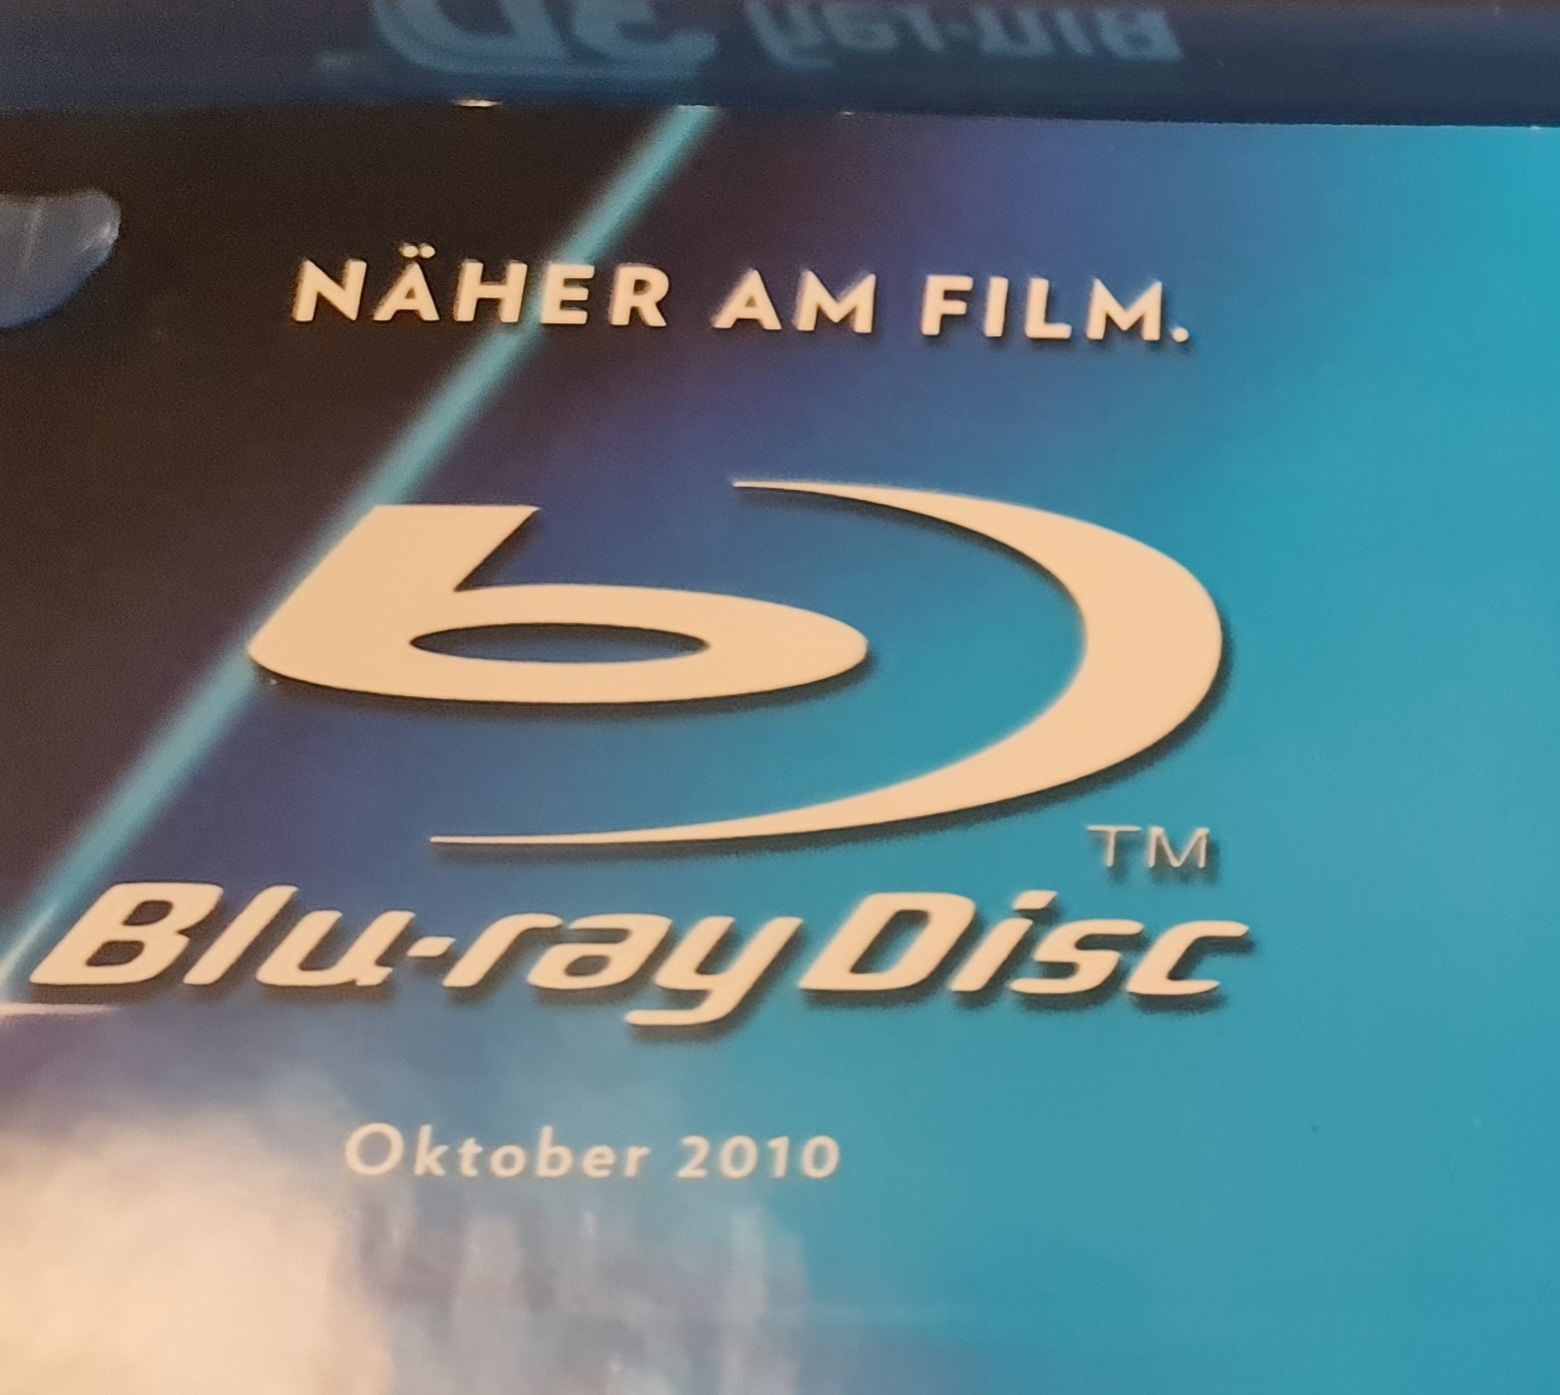 DVD Blueray  Max Payene